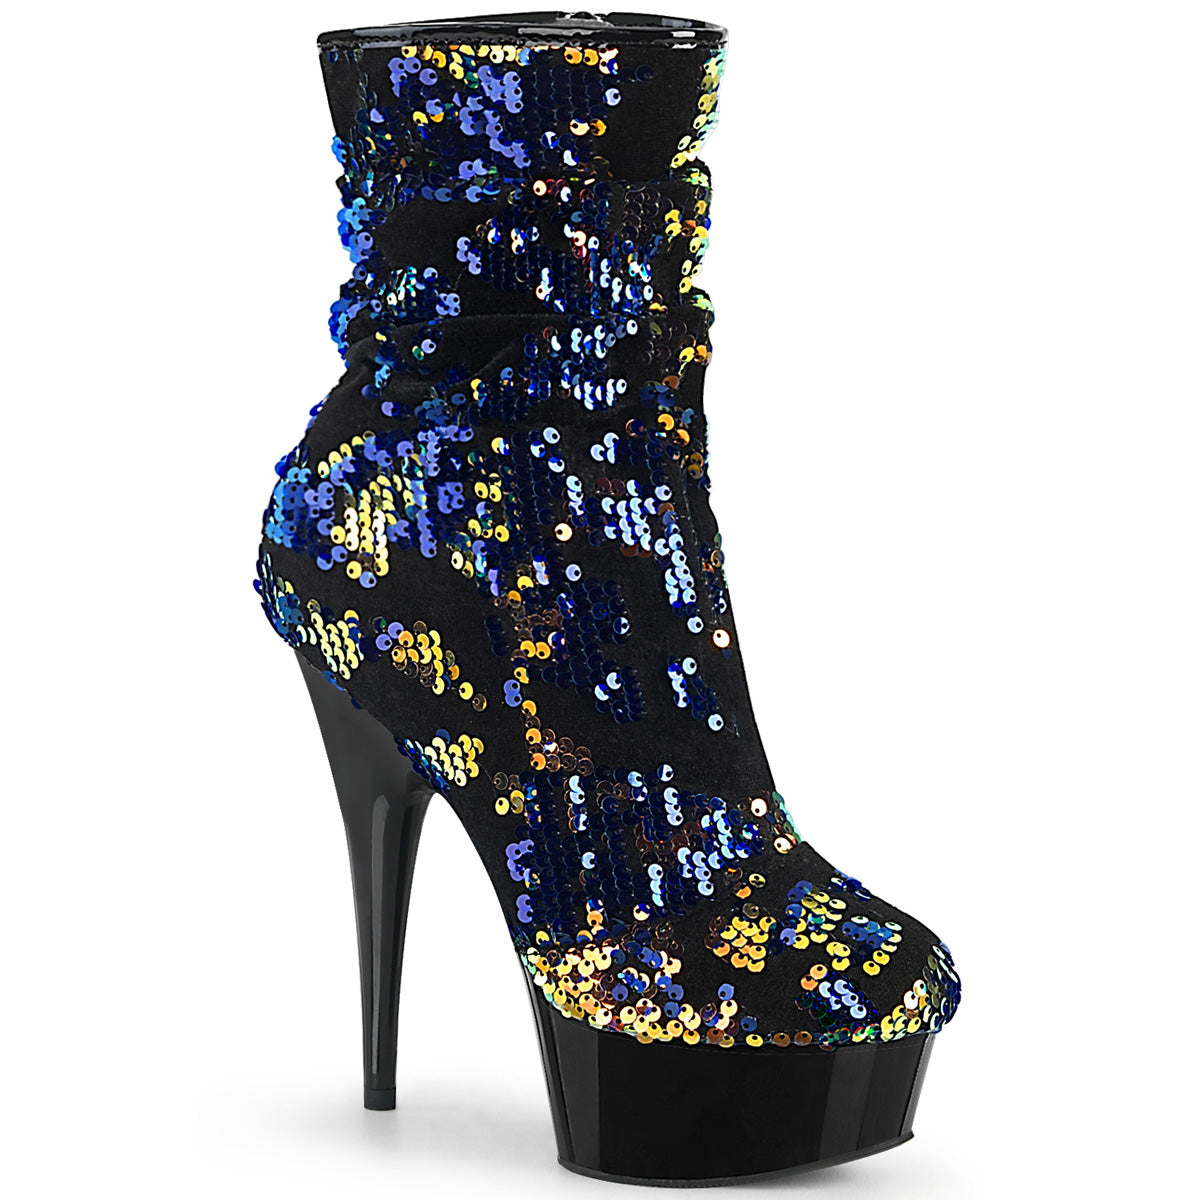 DELIGHT-1004 6" Heel Blue Iridescent Sequins Strippers Shoes